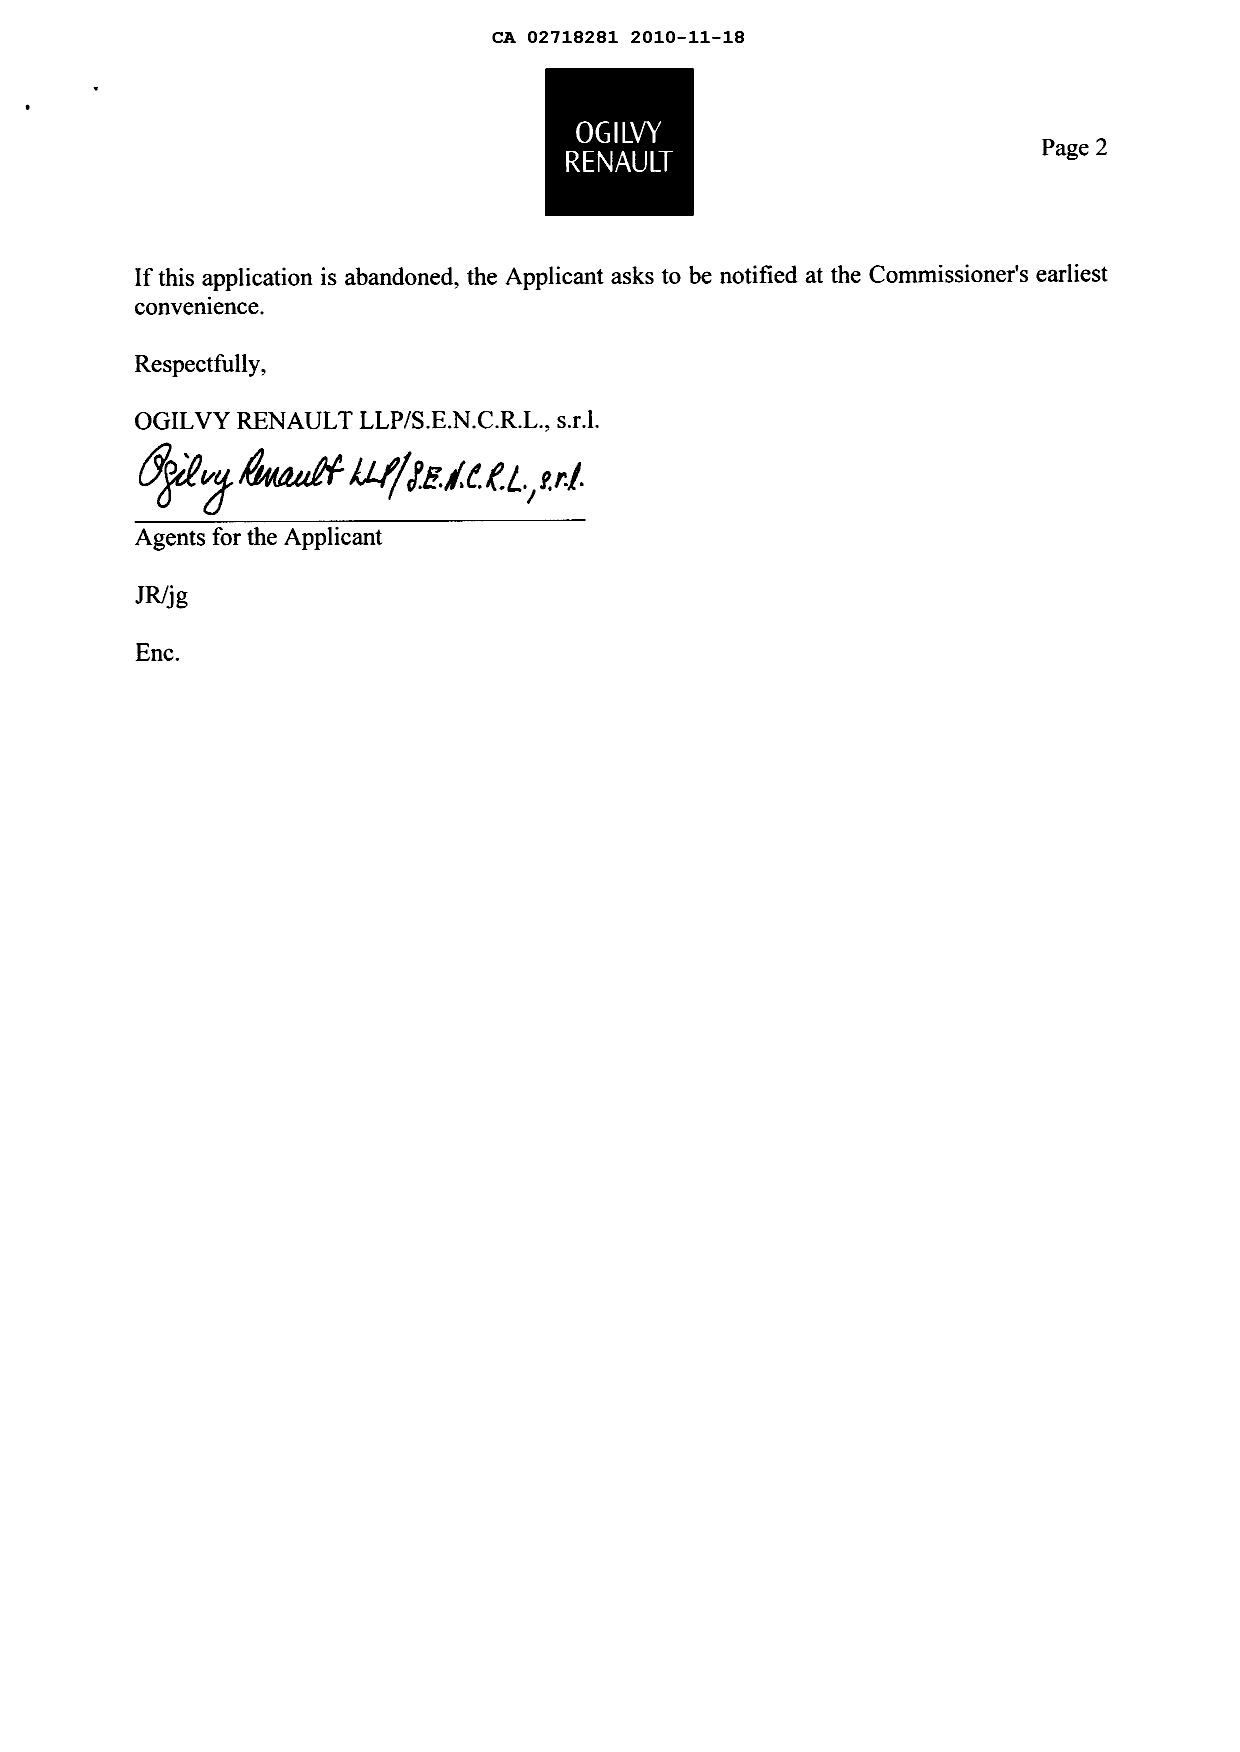 Canadian Patent Document 2718281. Correspondence 20101118. Image 2 of 3